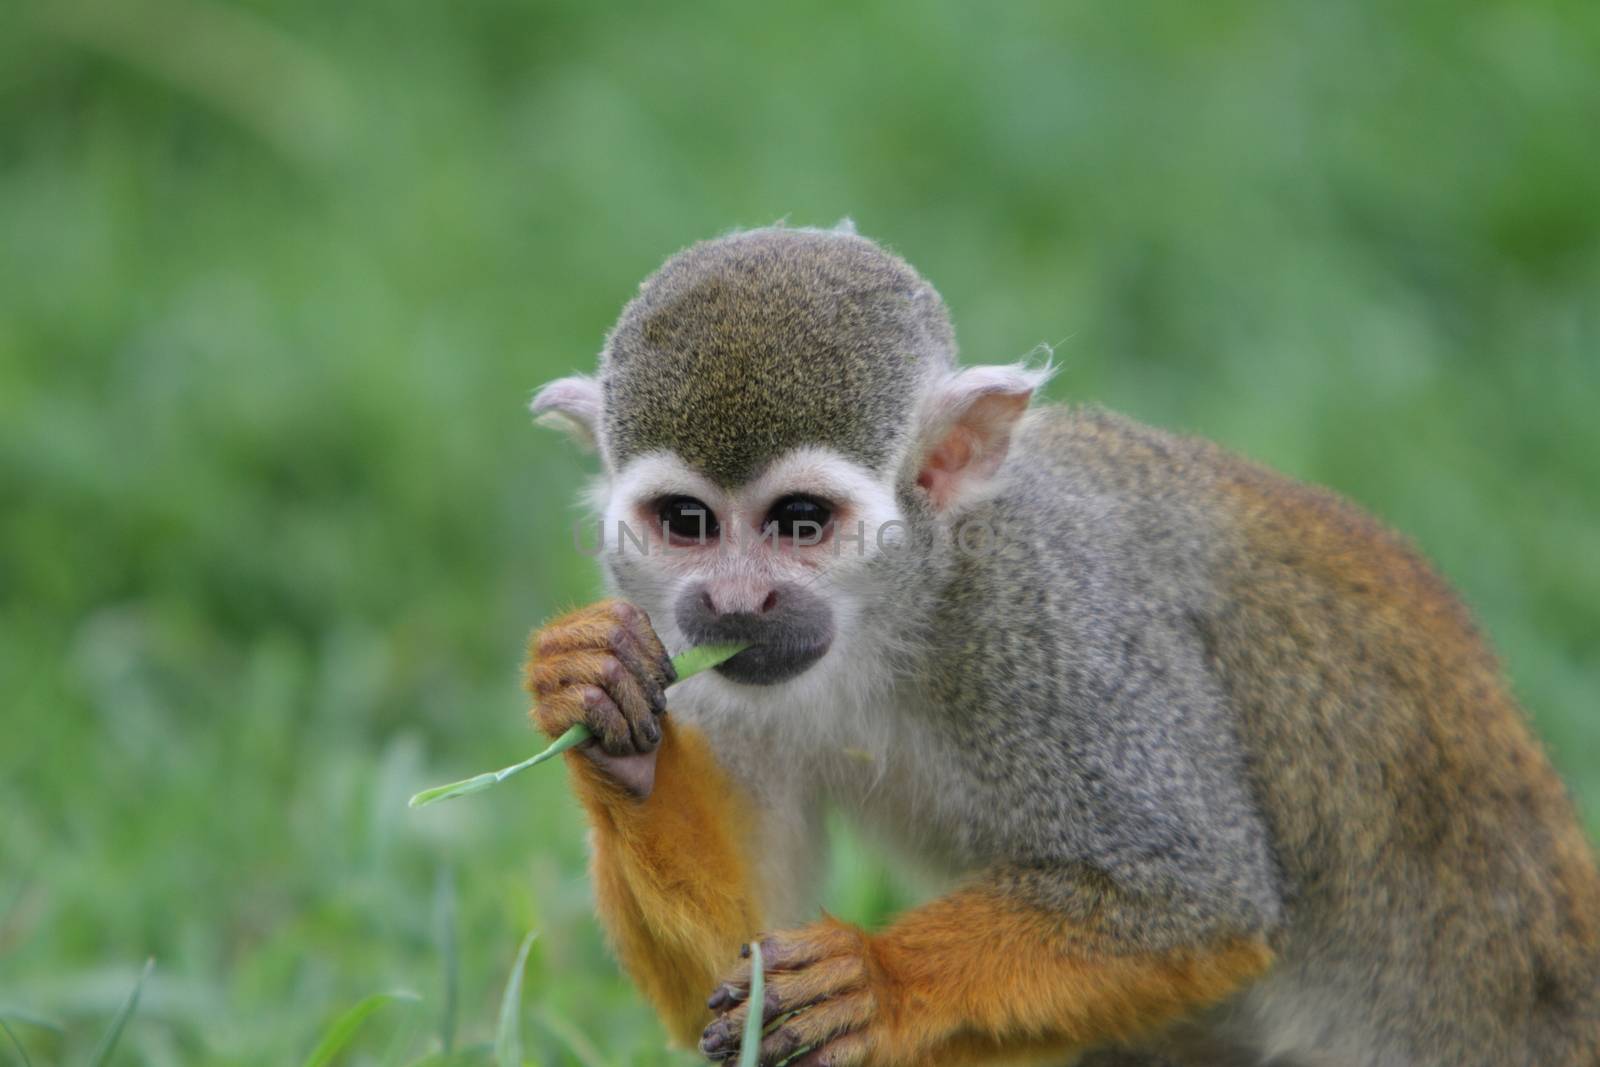 Squirrel monkey by mitzy